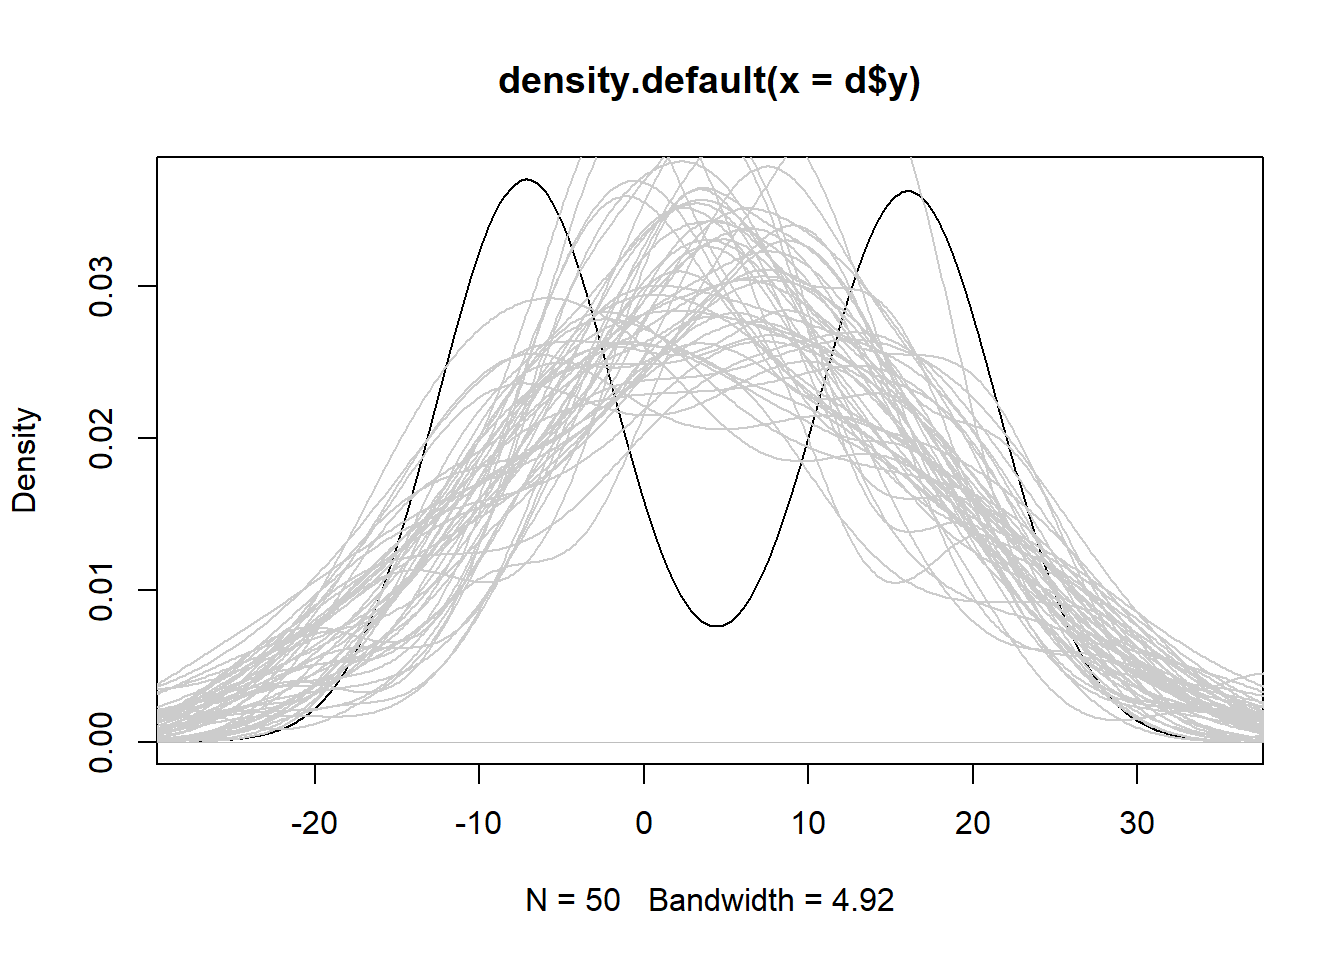 One density plot